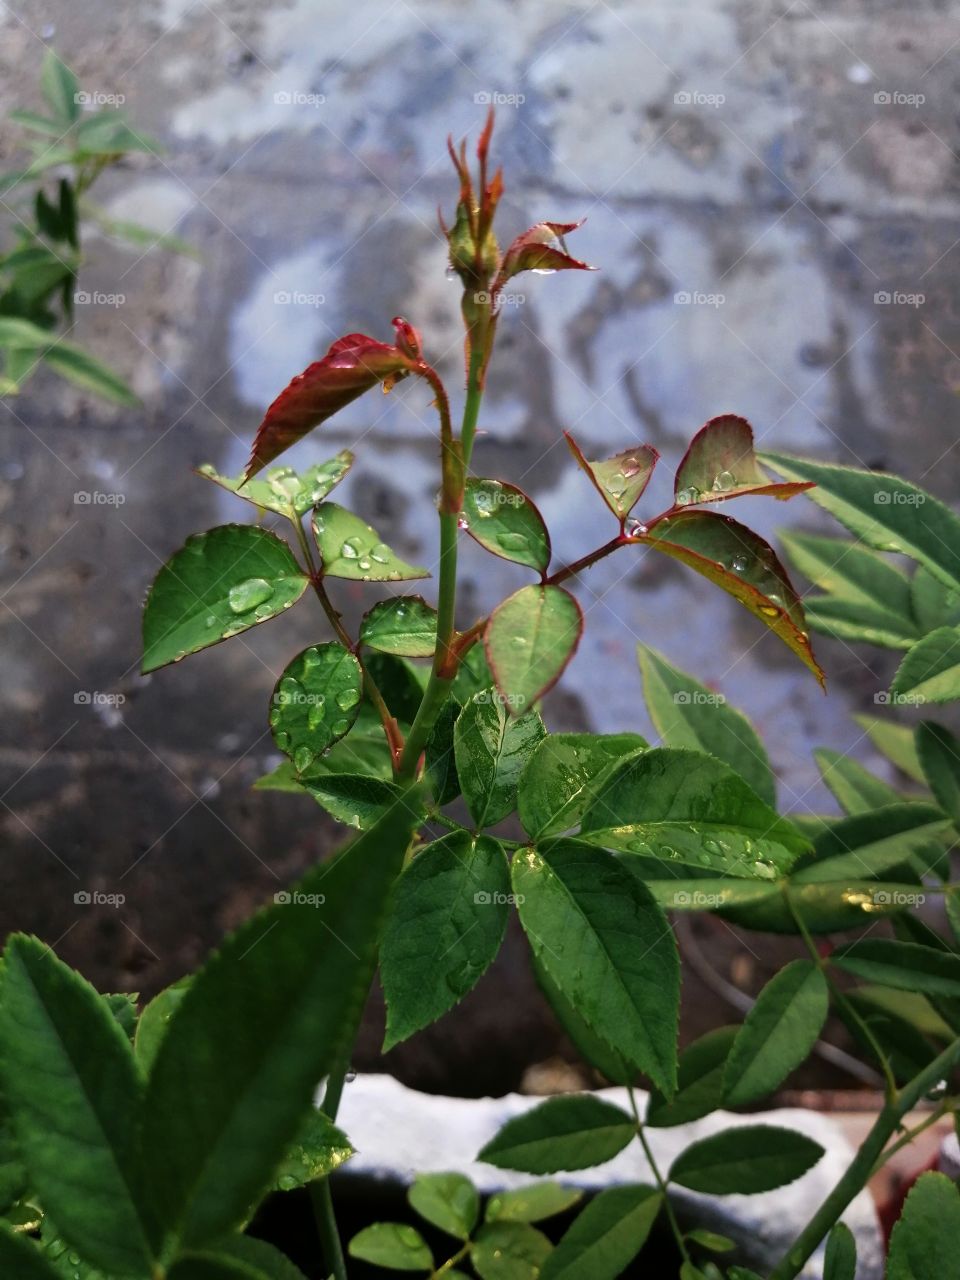 First signs of spring. Freshly growing rose flower bud in the spring season.